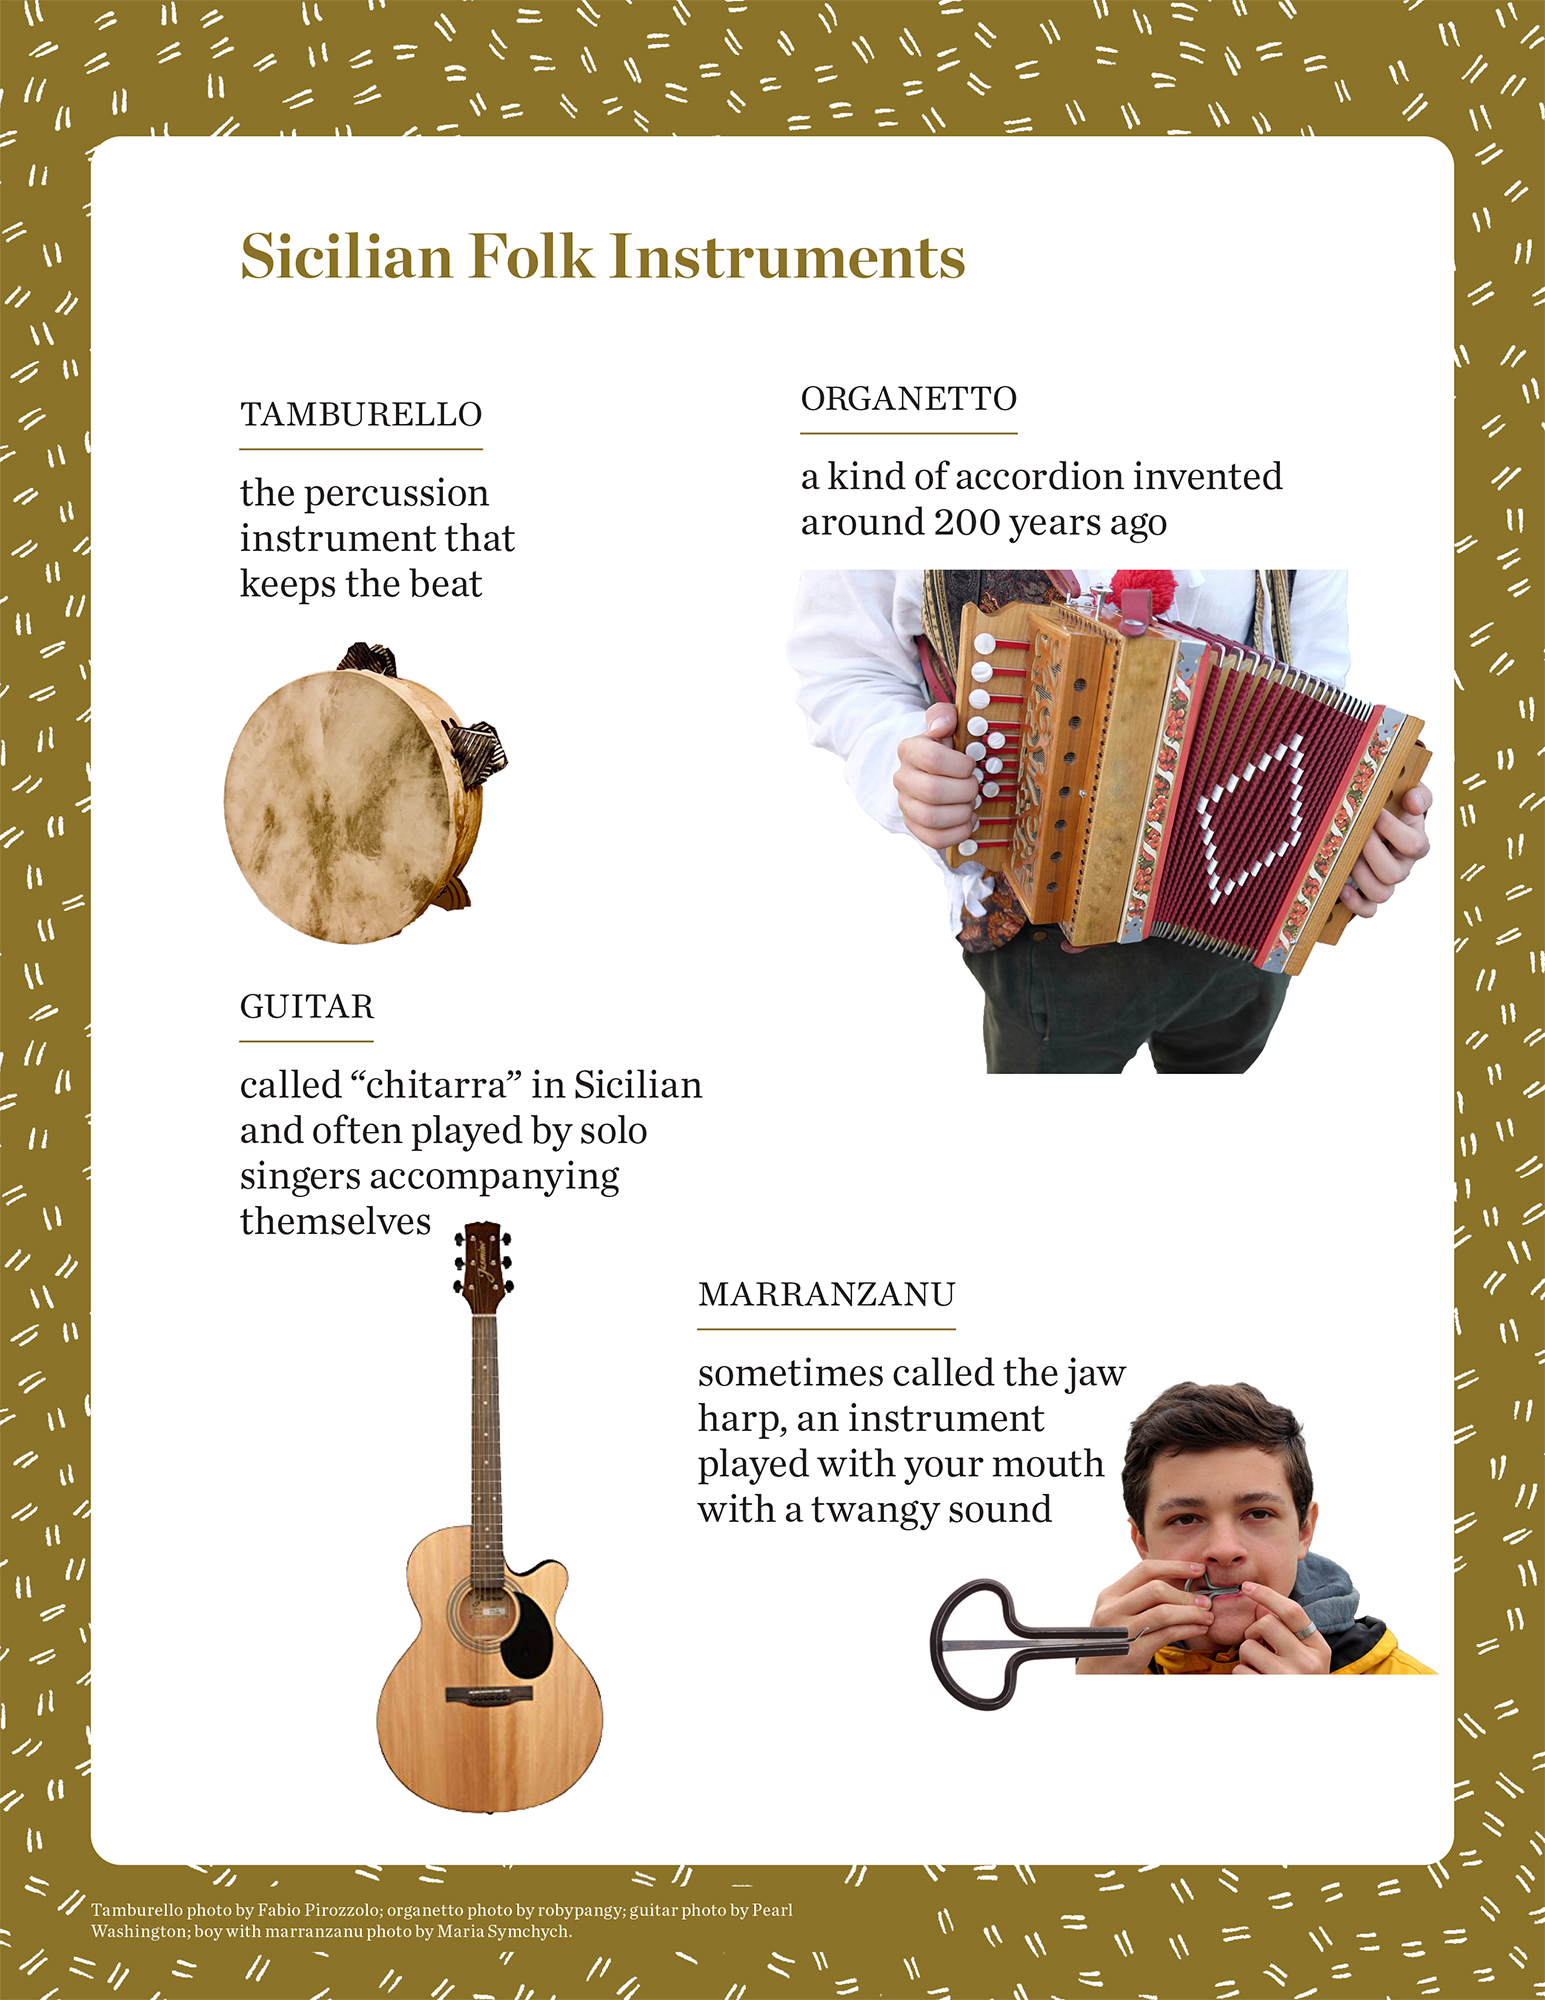 "Sicilian Folk Instruments" student activity depicting a tamburello, organetto, guitar, and marranzanu